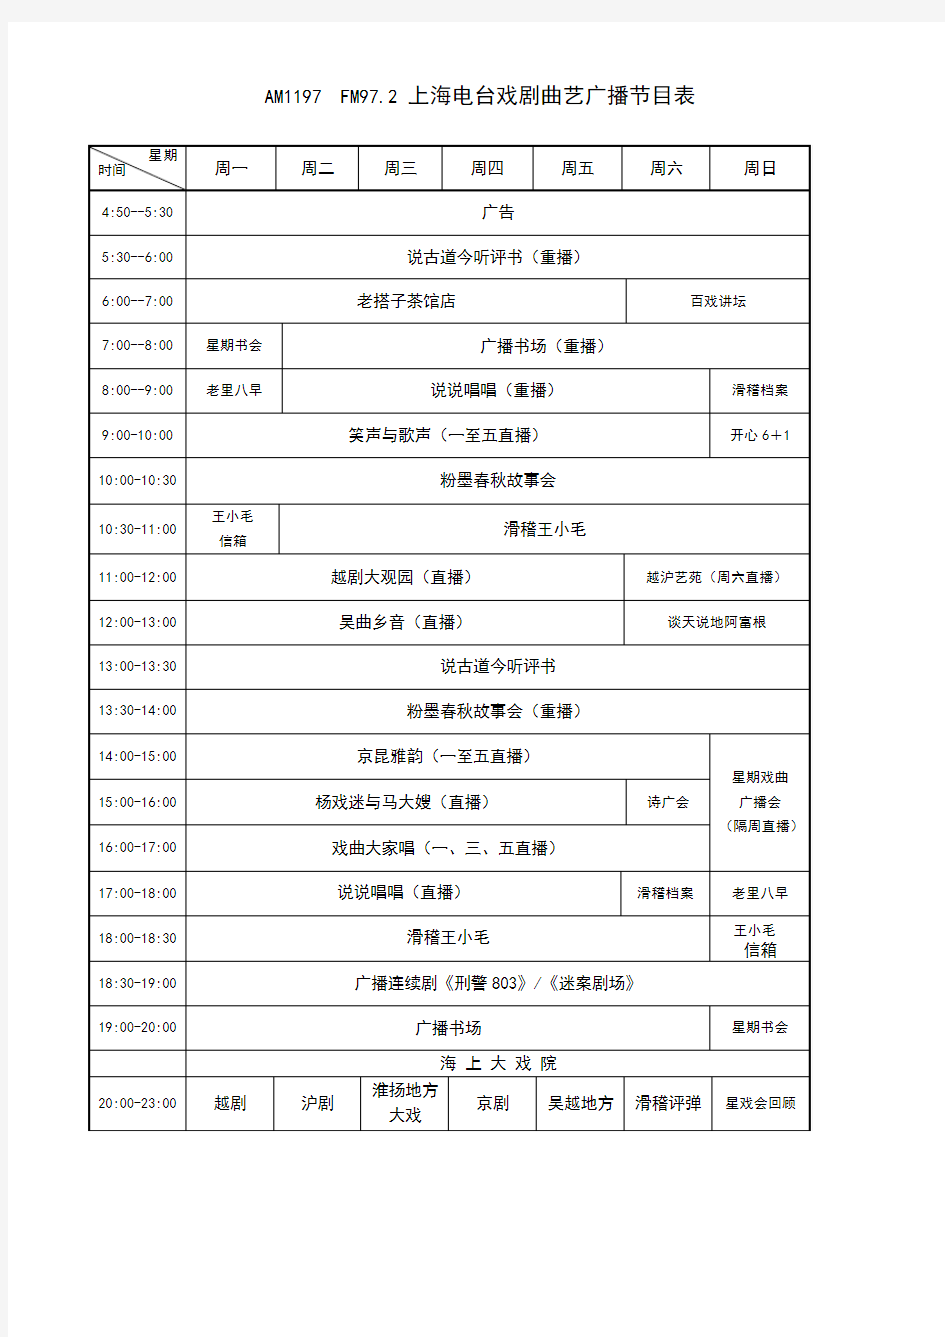 AM1197 FM972 上海电台戏剧曲艺广播节目表